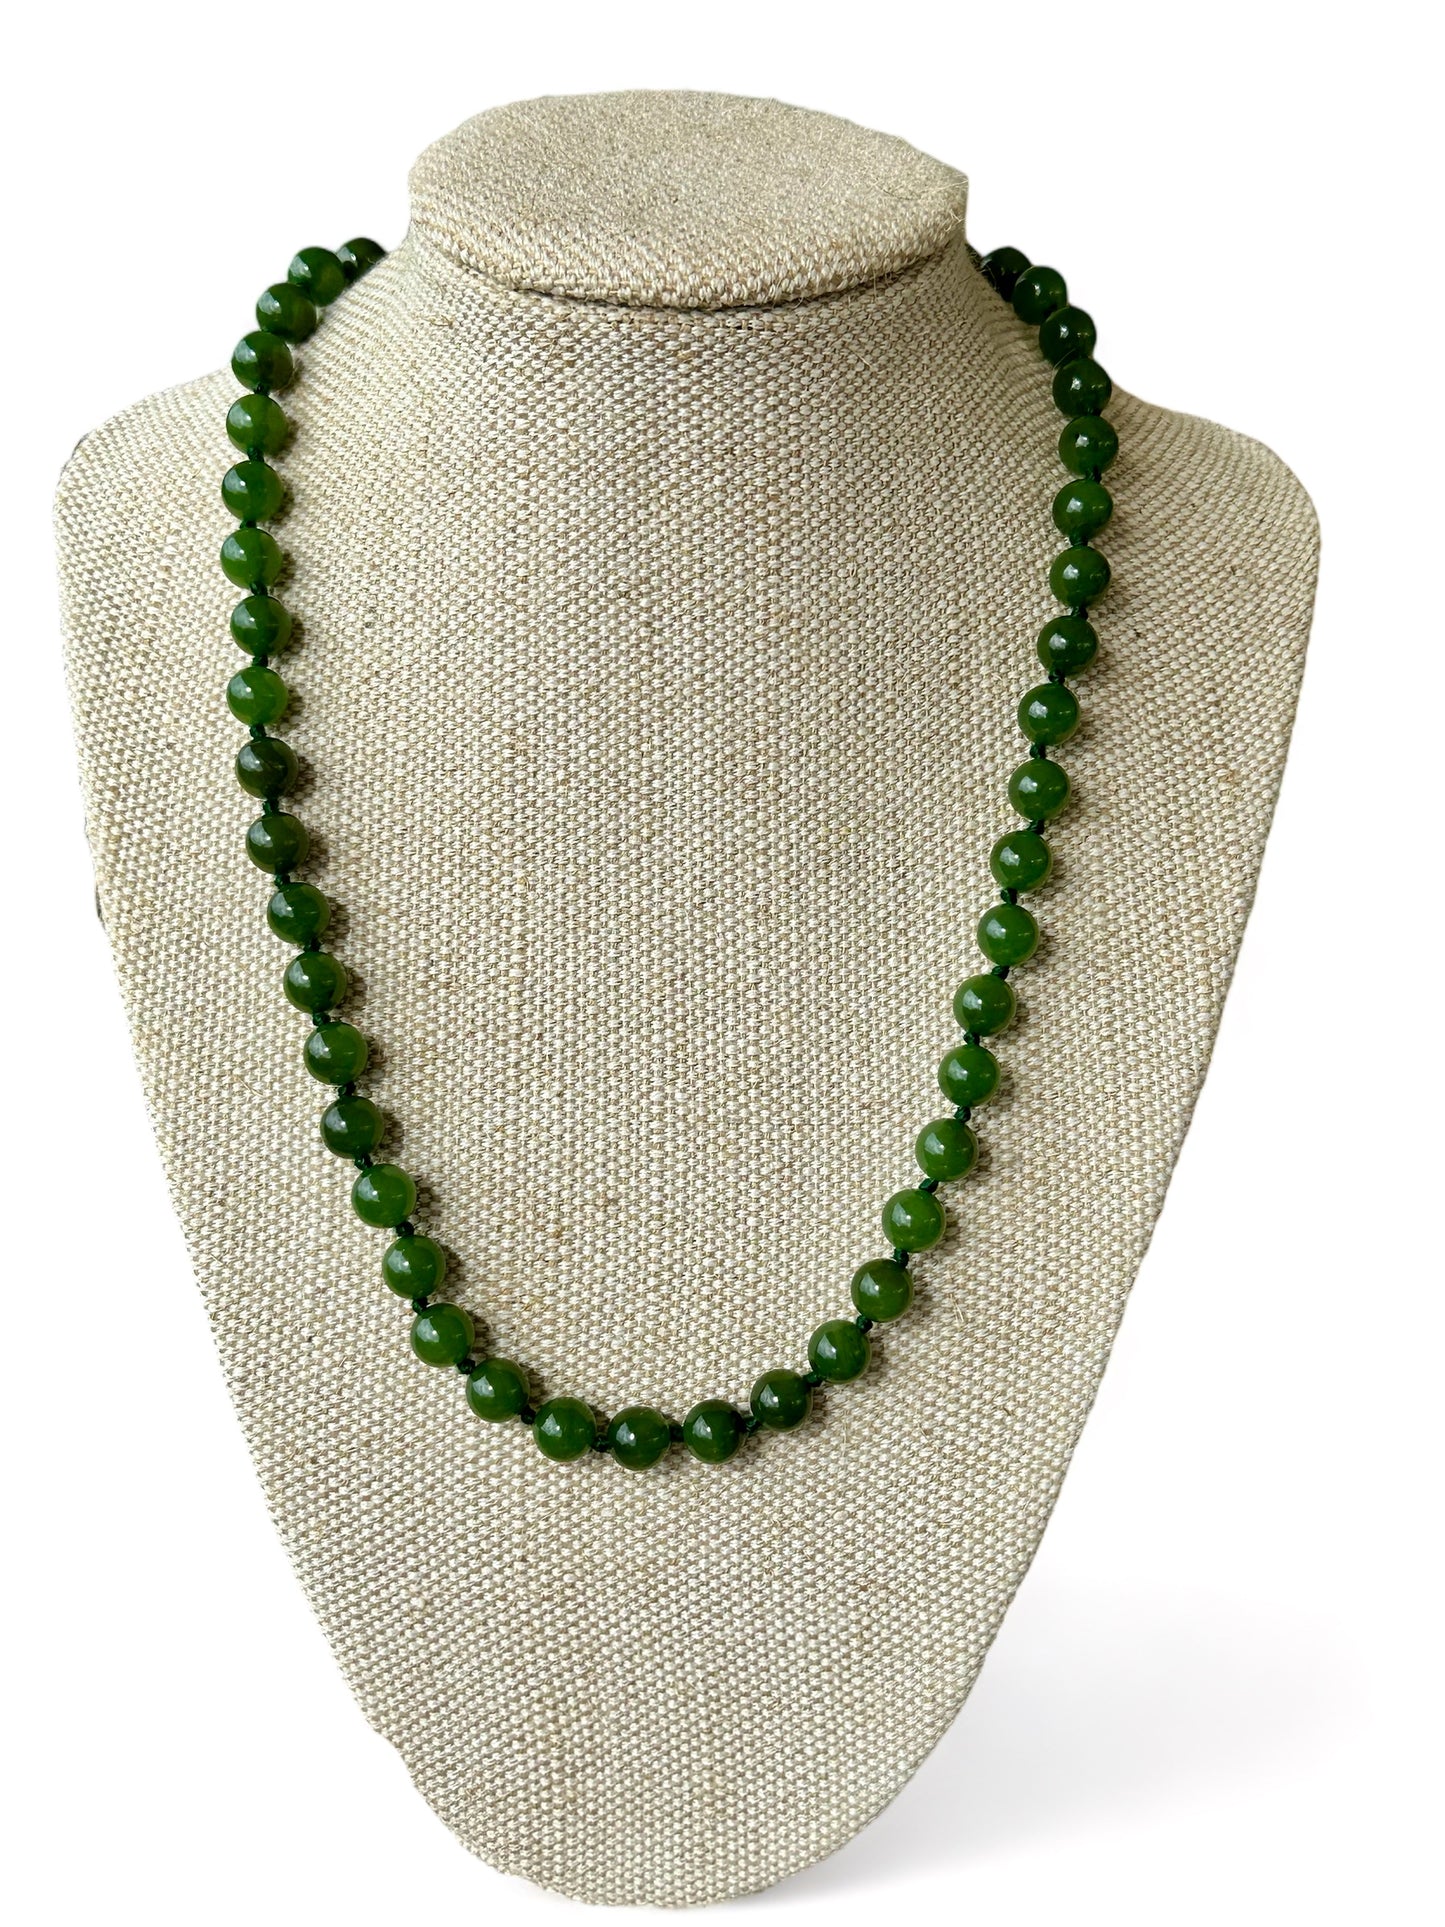 Australian Cowell green jade hand knotted 8mm bead strand